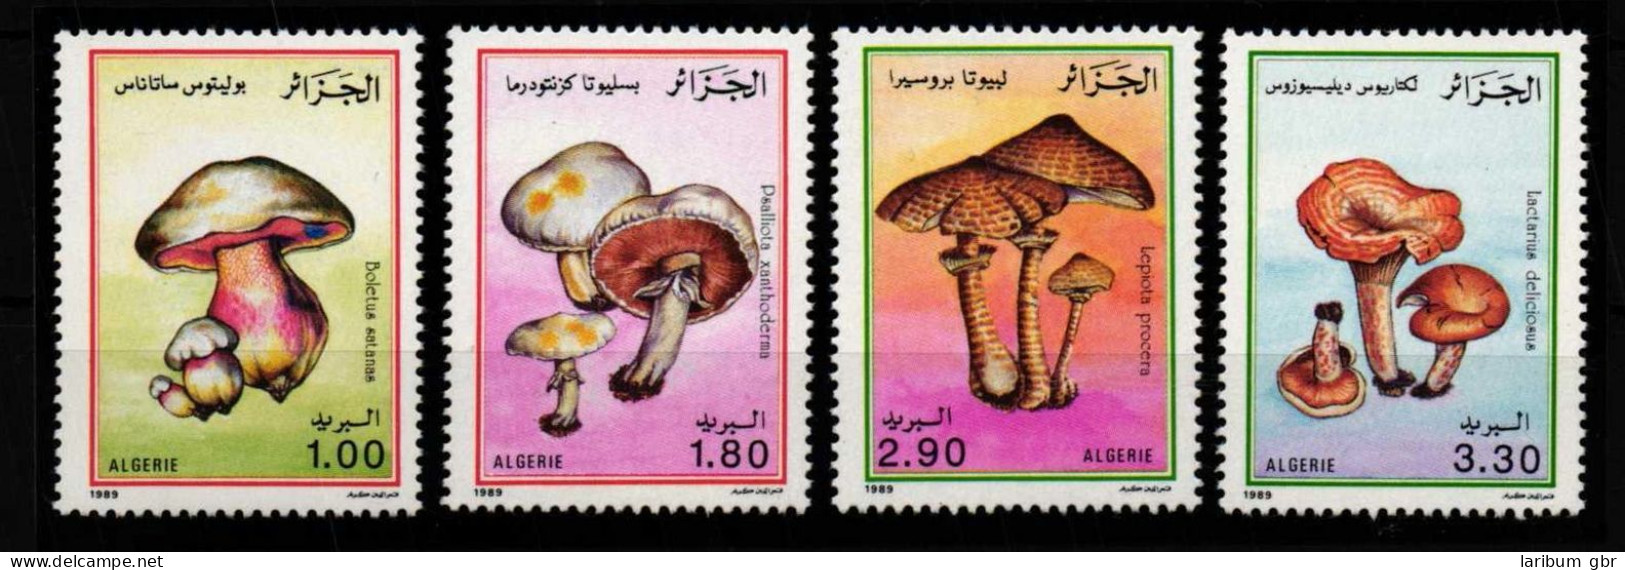 Algerien 1010-1013 Postfrisch Pilze #HQ334 - Algerien (1962-...)